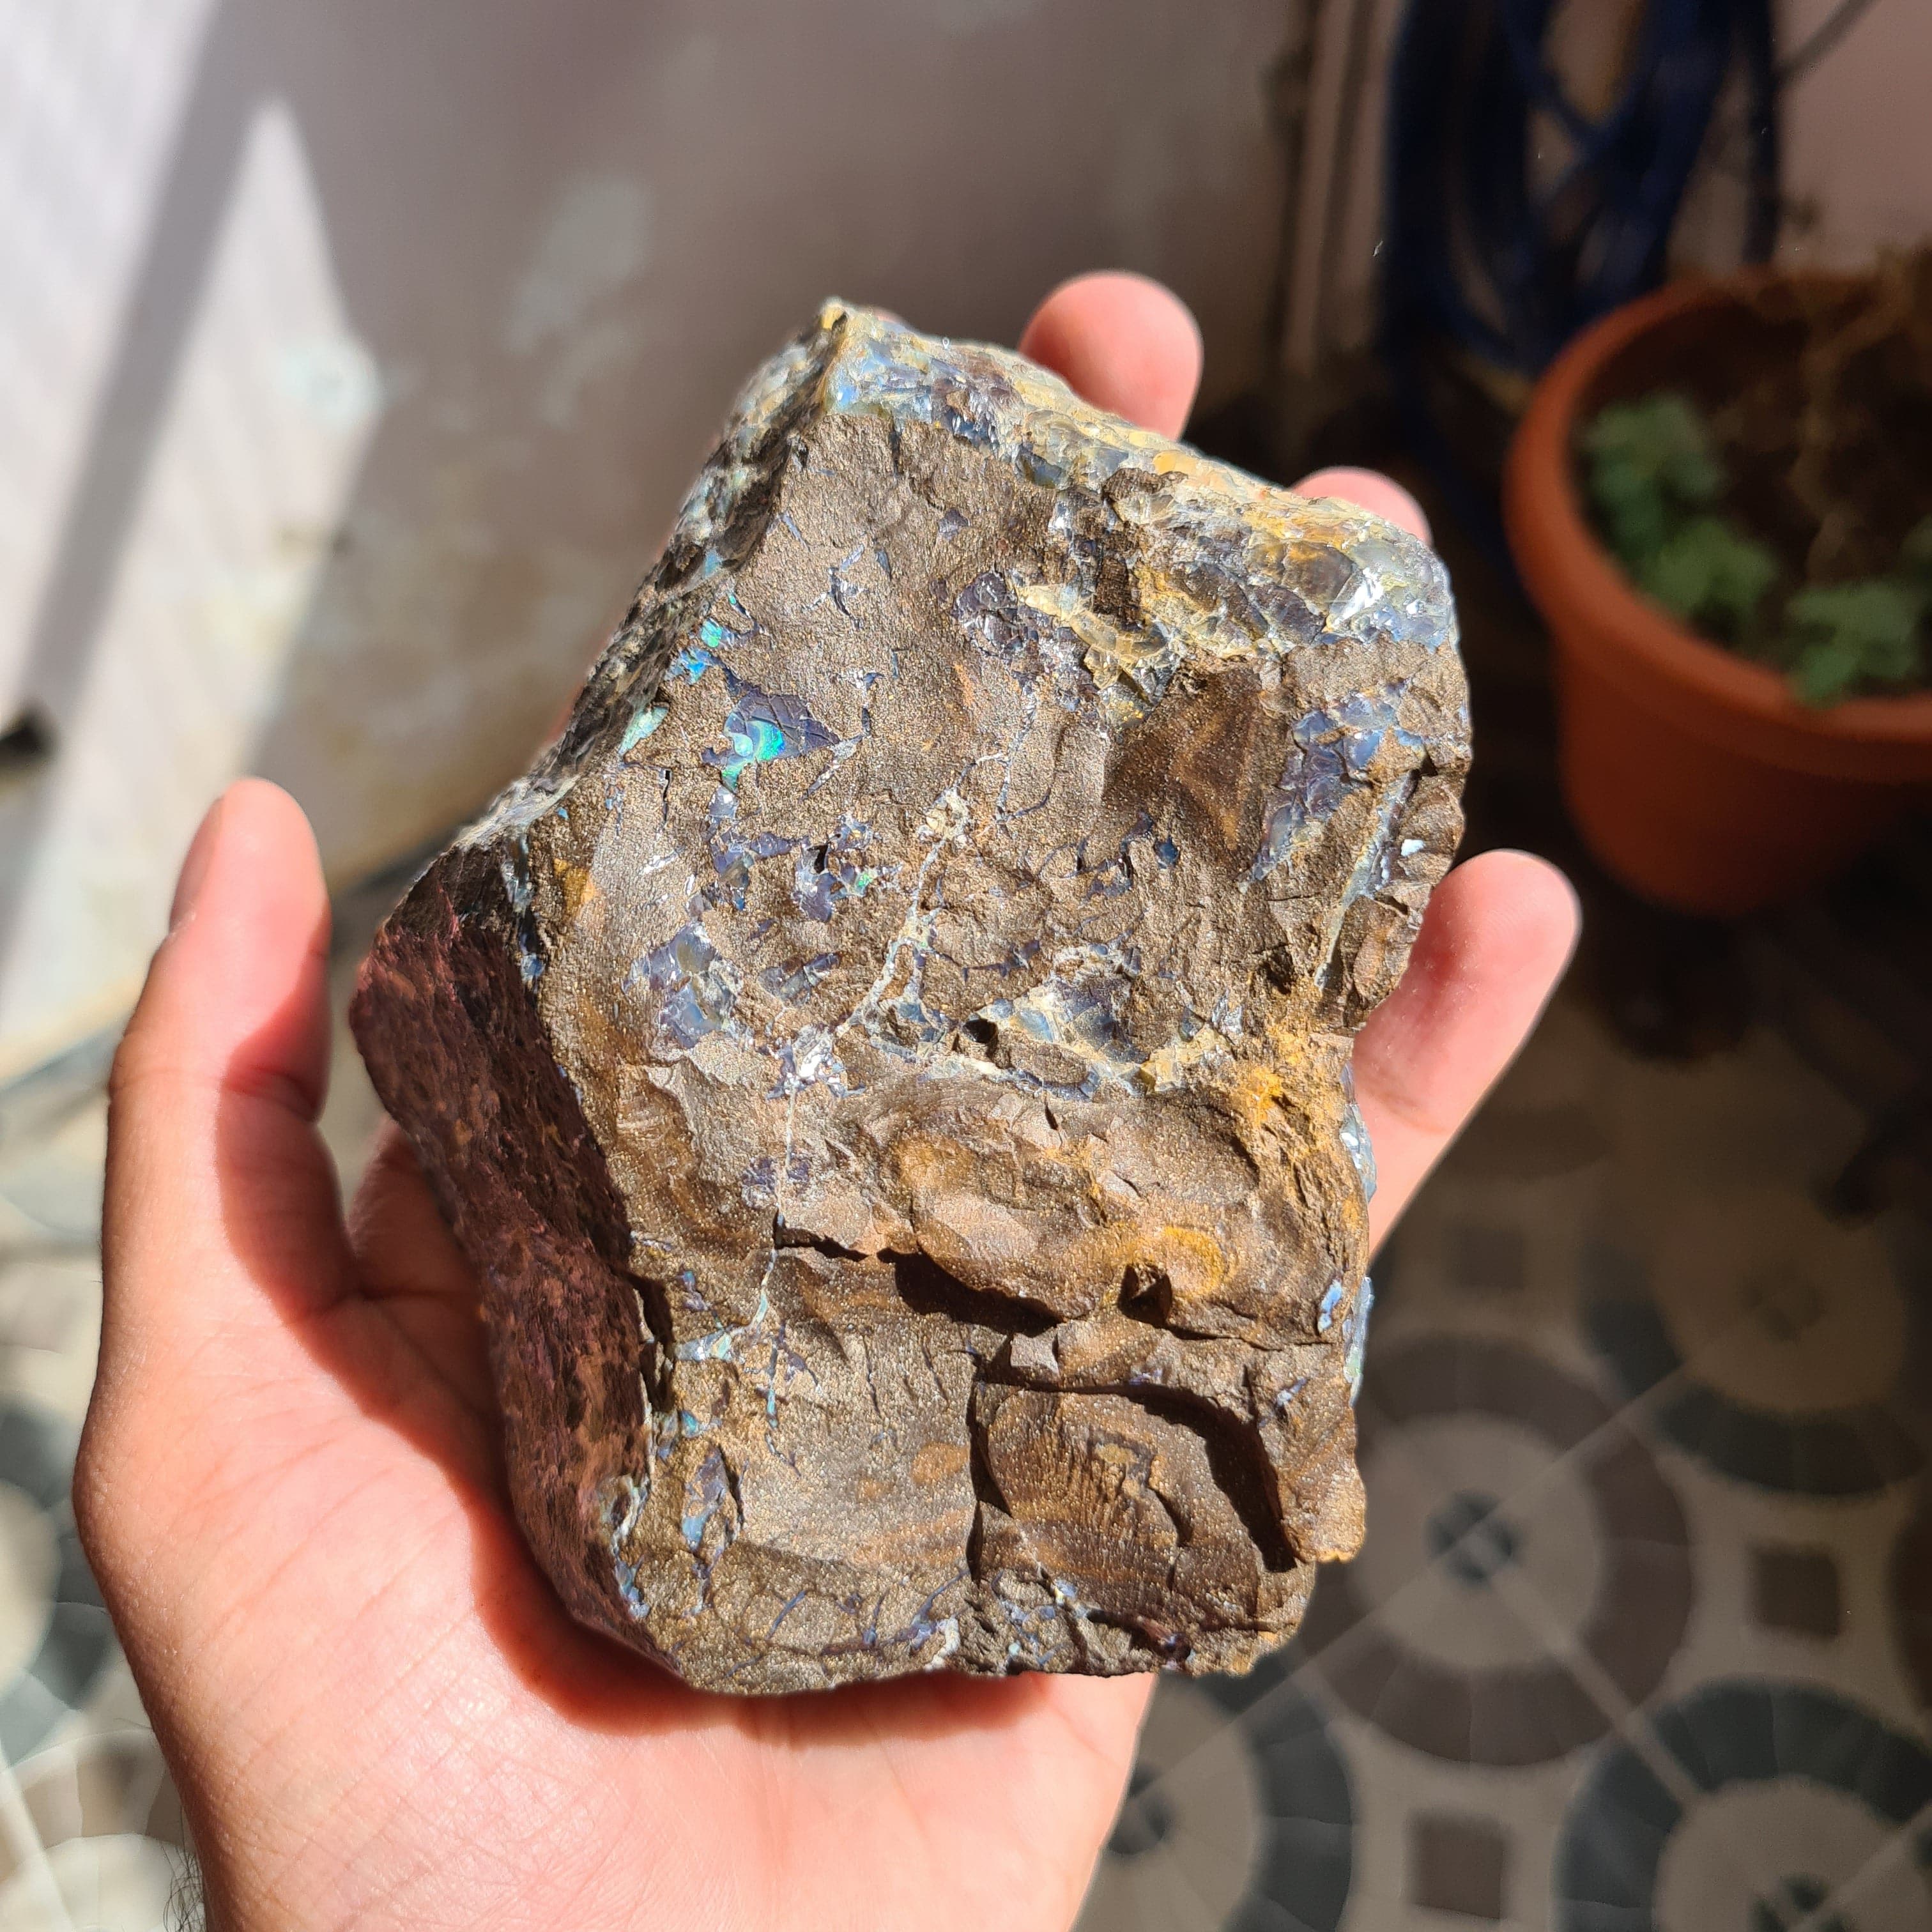 965 GM Bigger Size Opal Rough Minerals Untreated Australian mined | 105x80x80mm - The LabradoriteKing